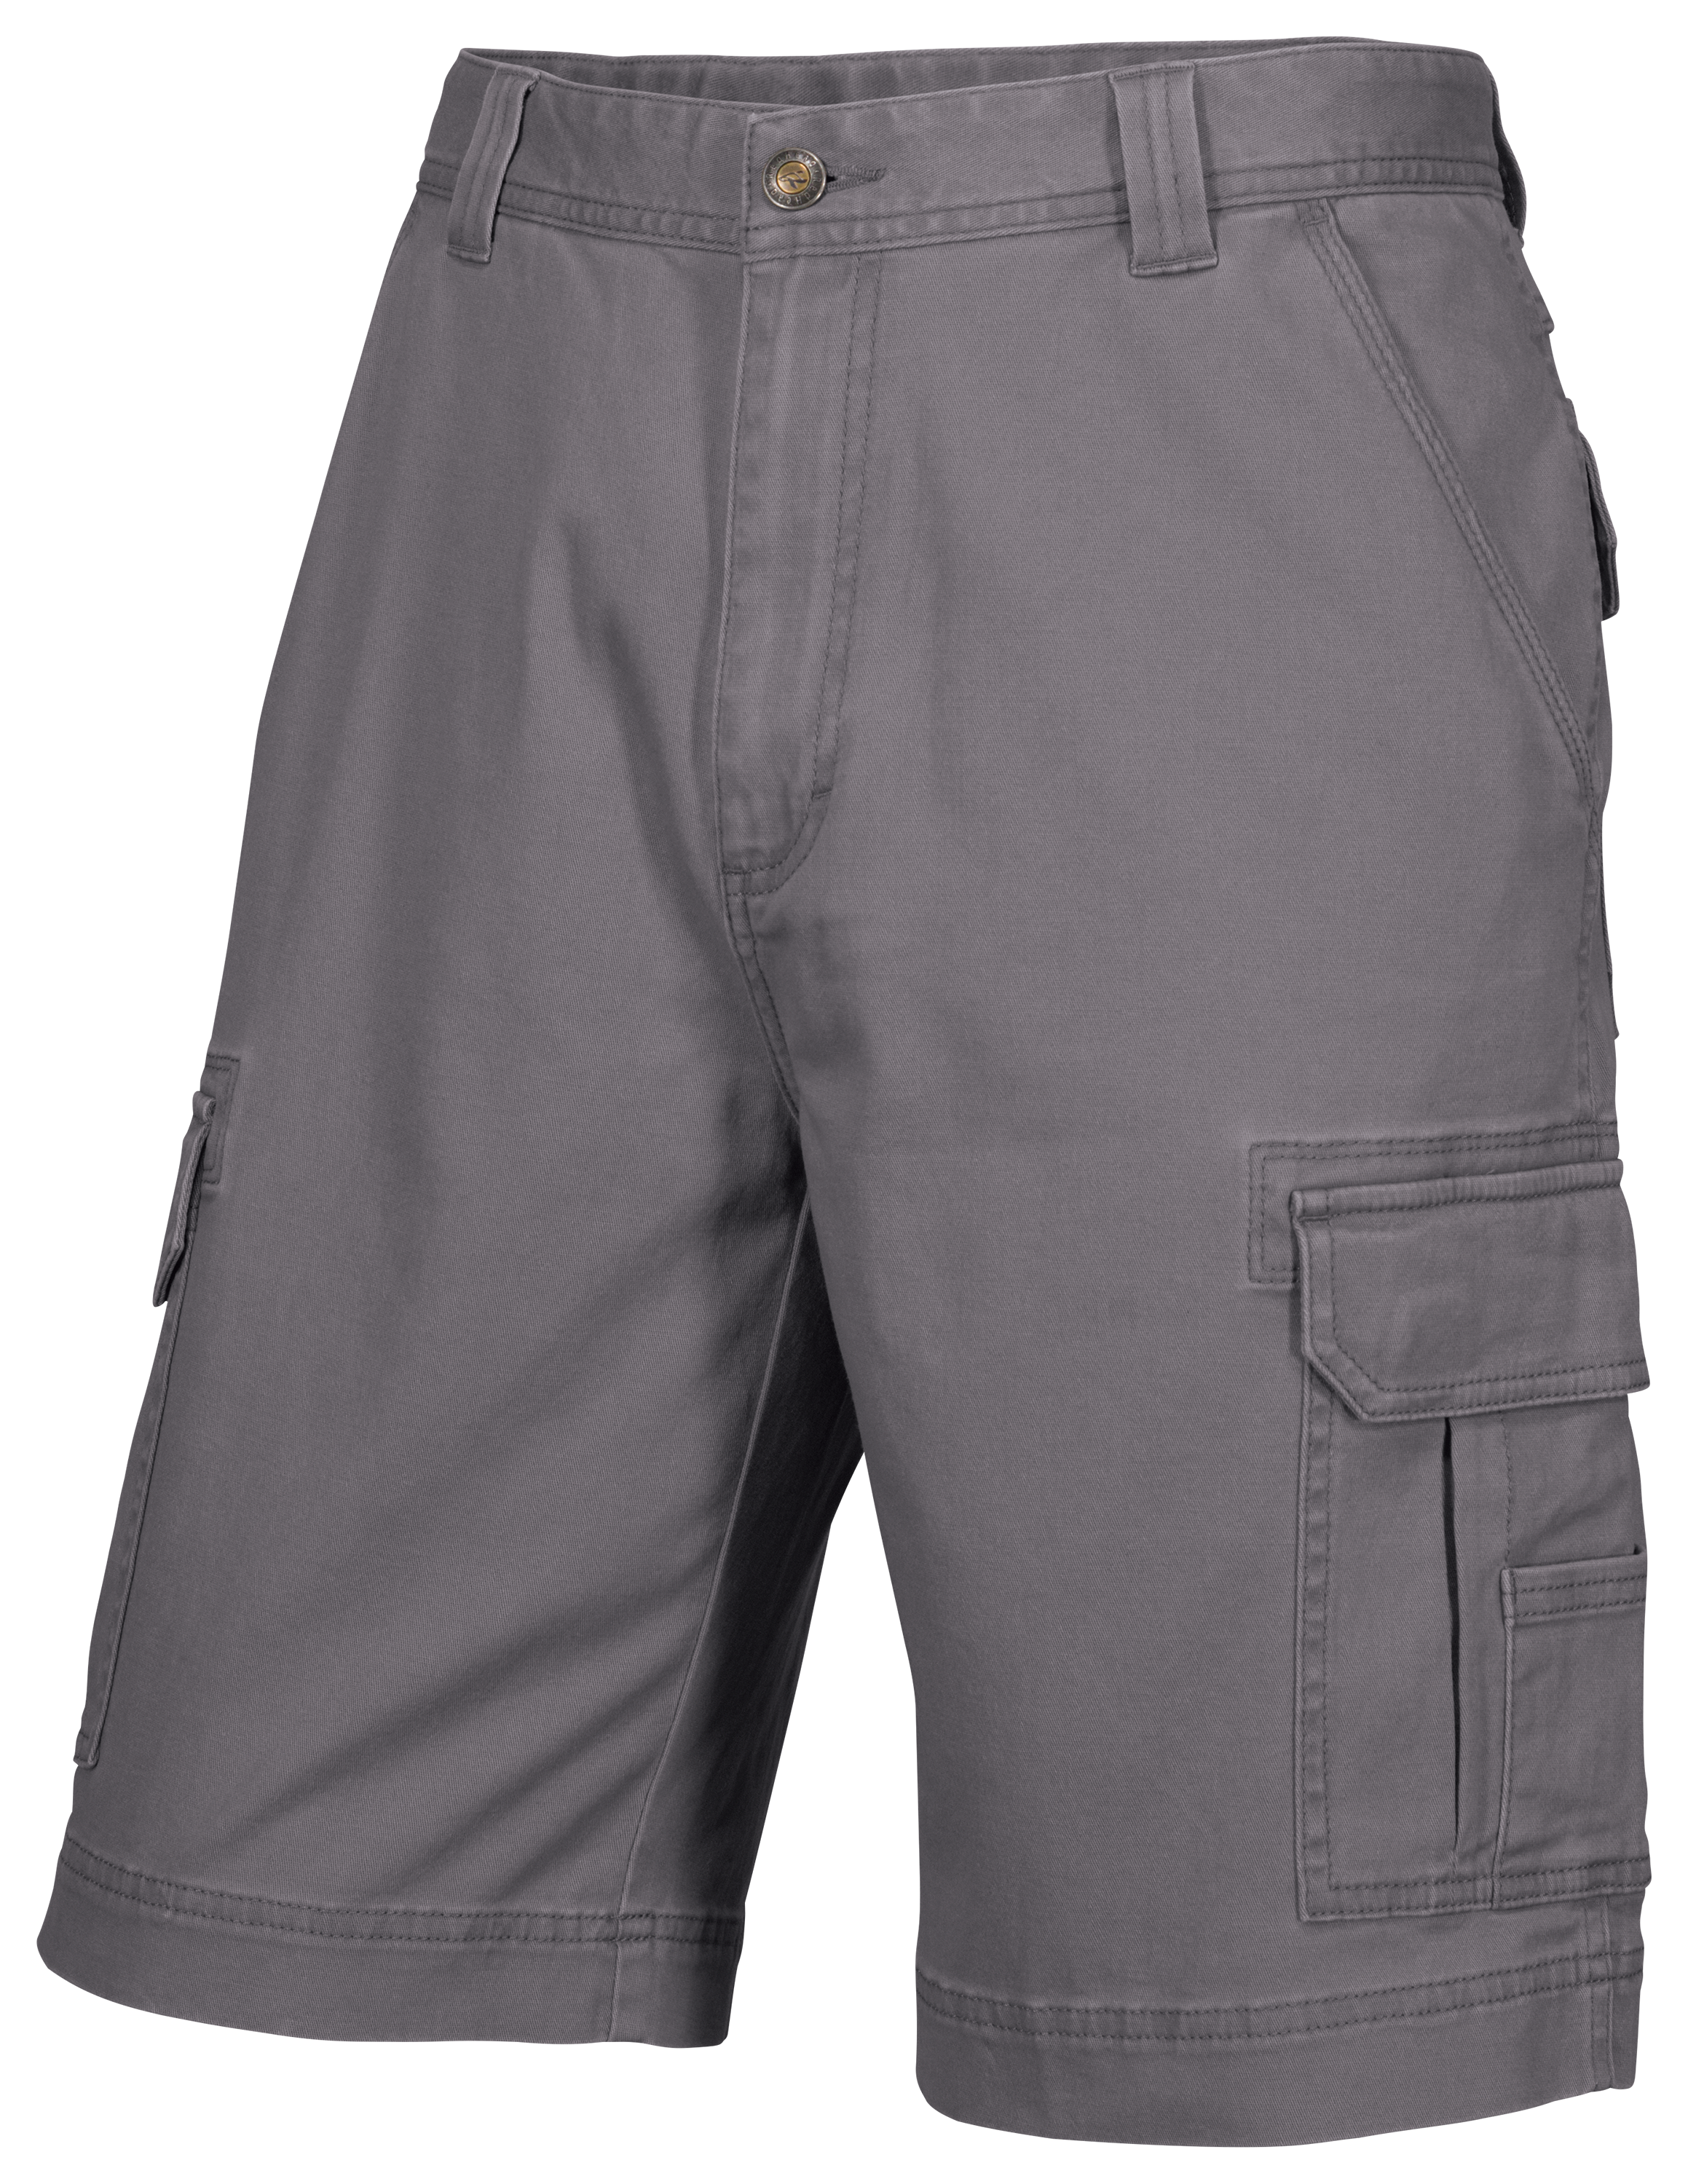 Redhead Fulton Flex Cargo Shorts for Men - Brown - 34